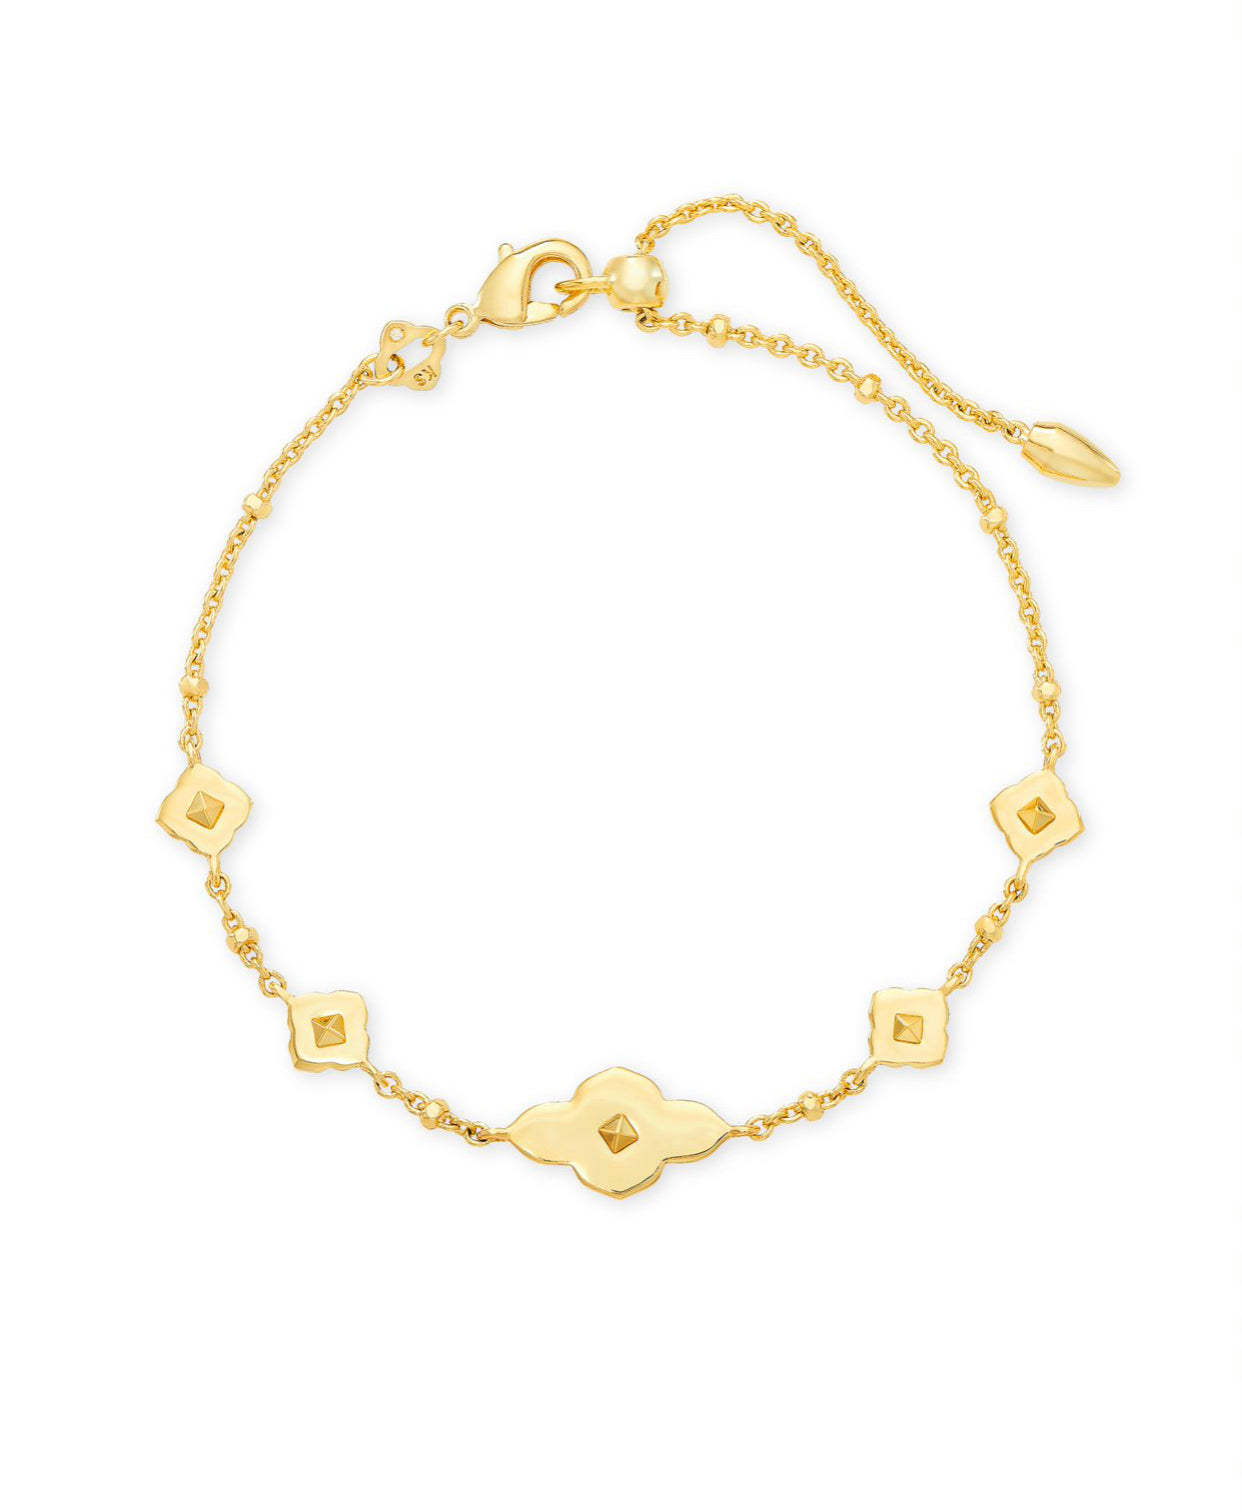 Abbie Delicate Chain Bracelet in Gold